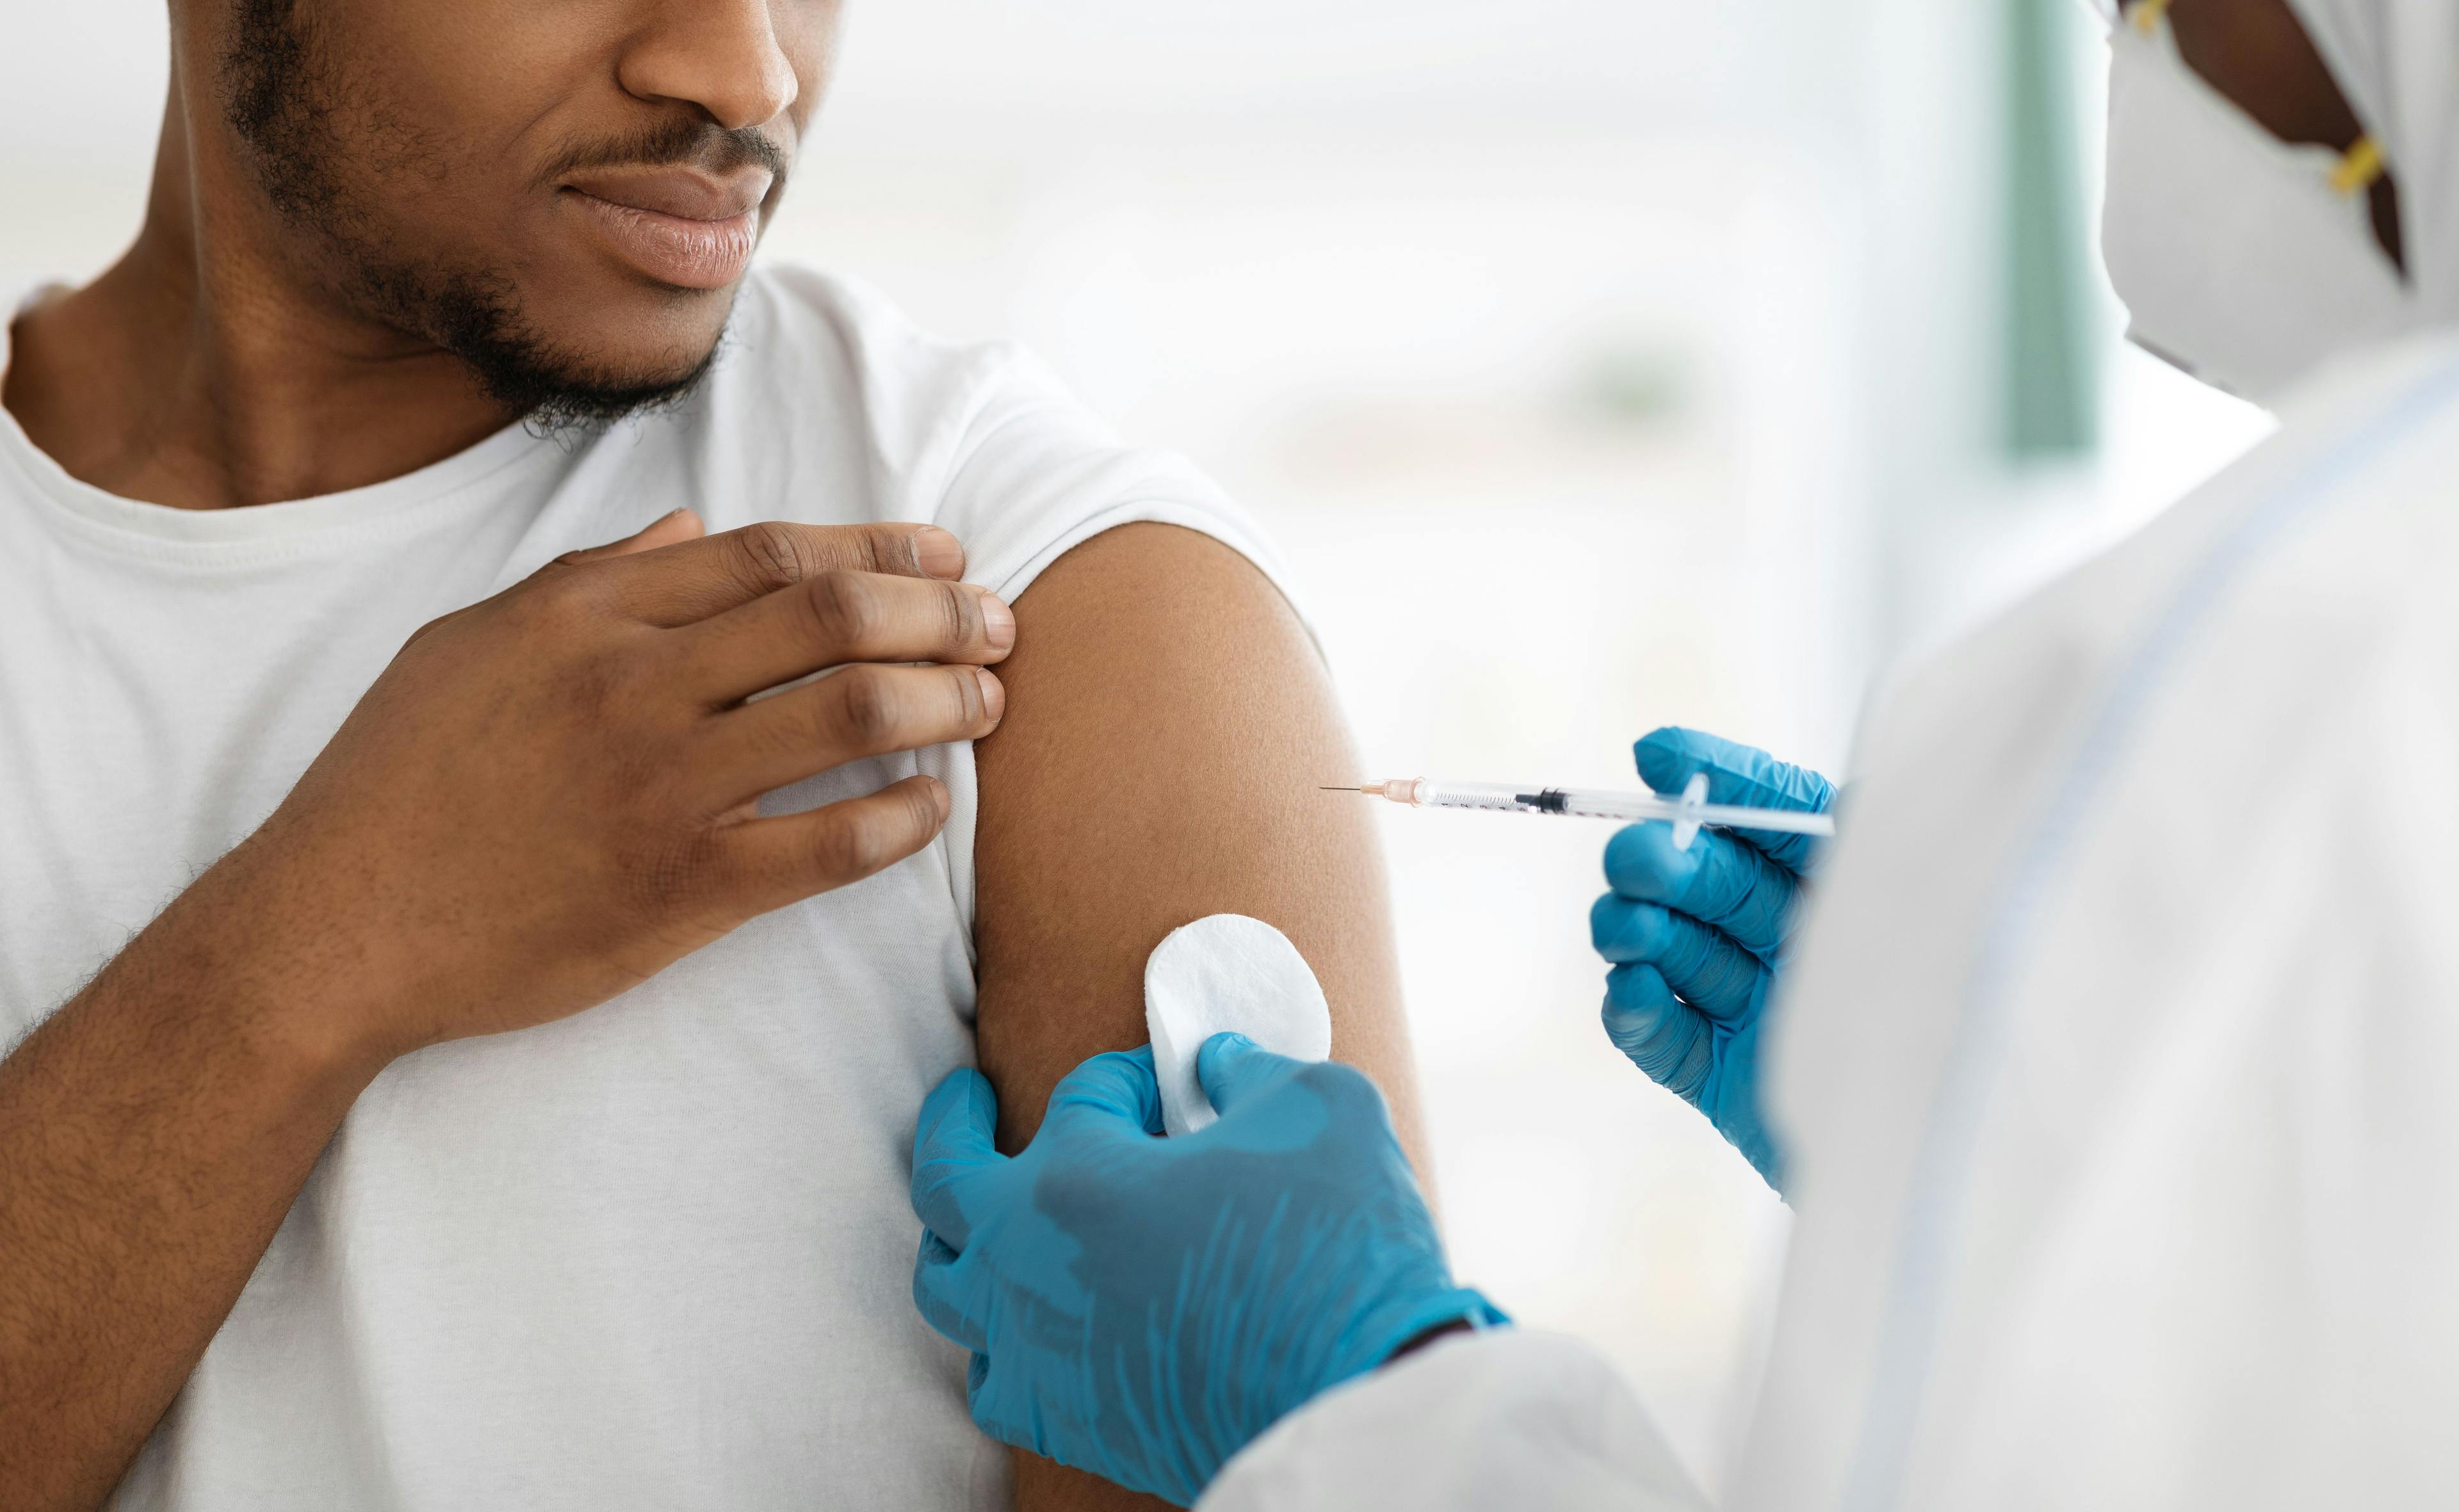 Man receiving flu vaccine / Prostock-studio - stock.adobe.com